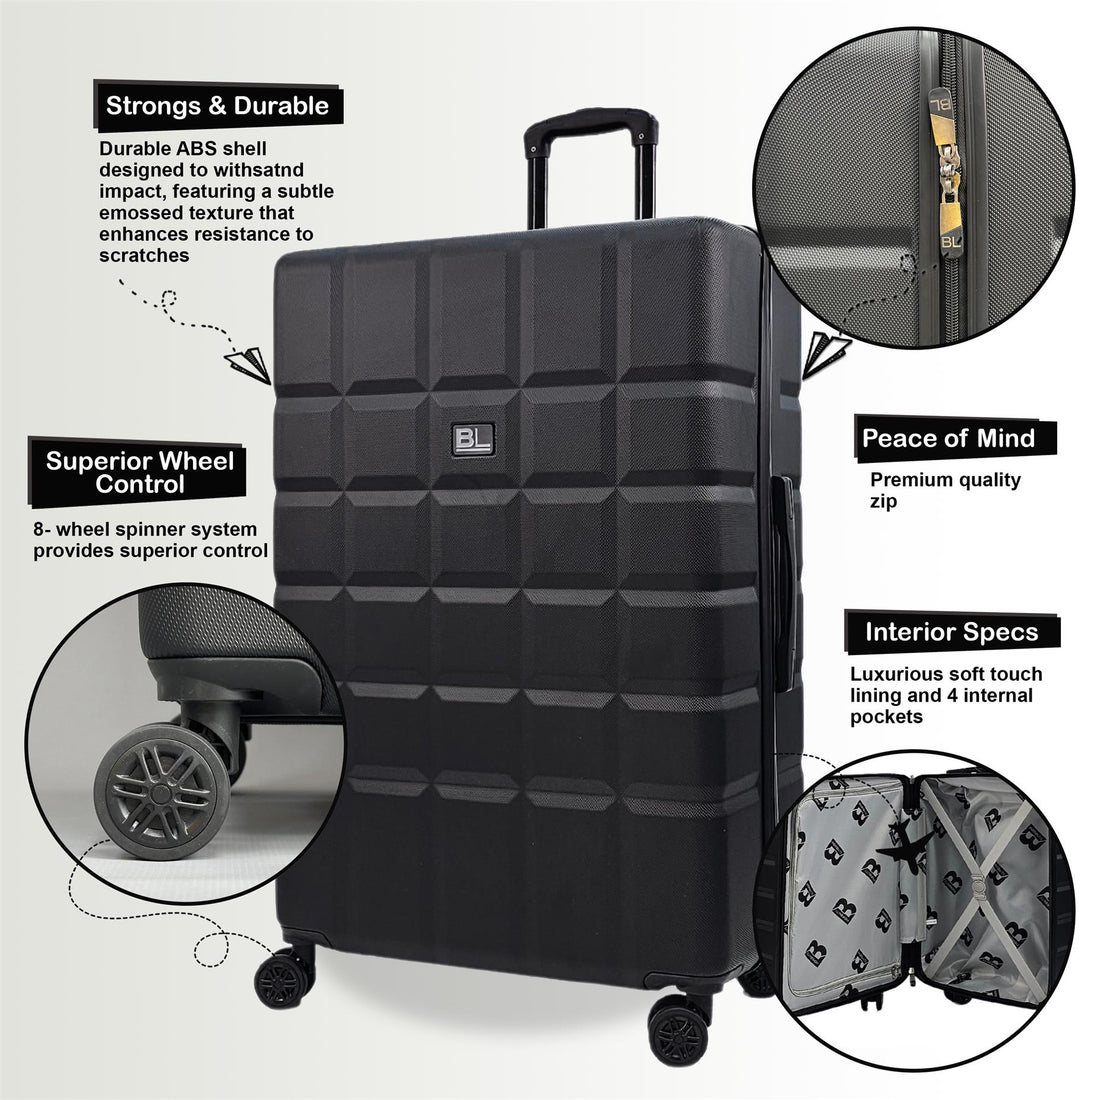 Coker Cabin Soft Shell Suitcase in Black